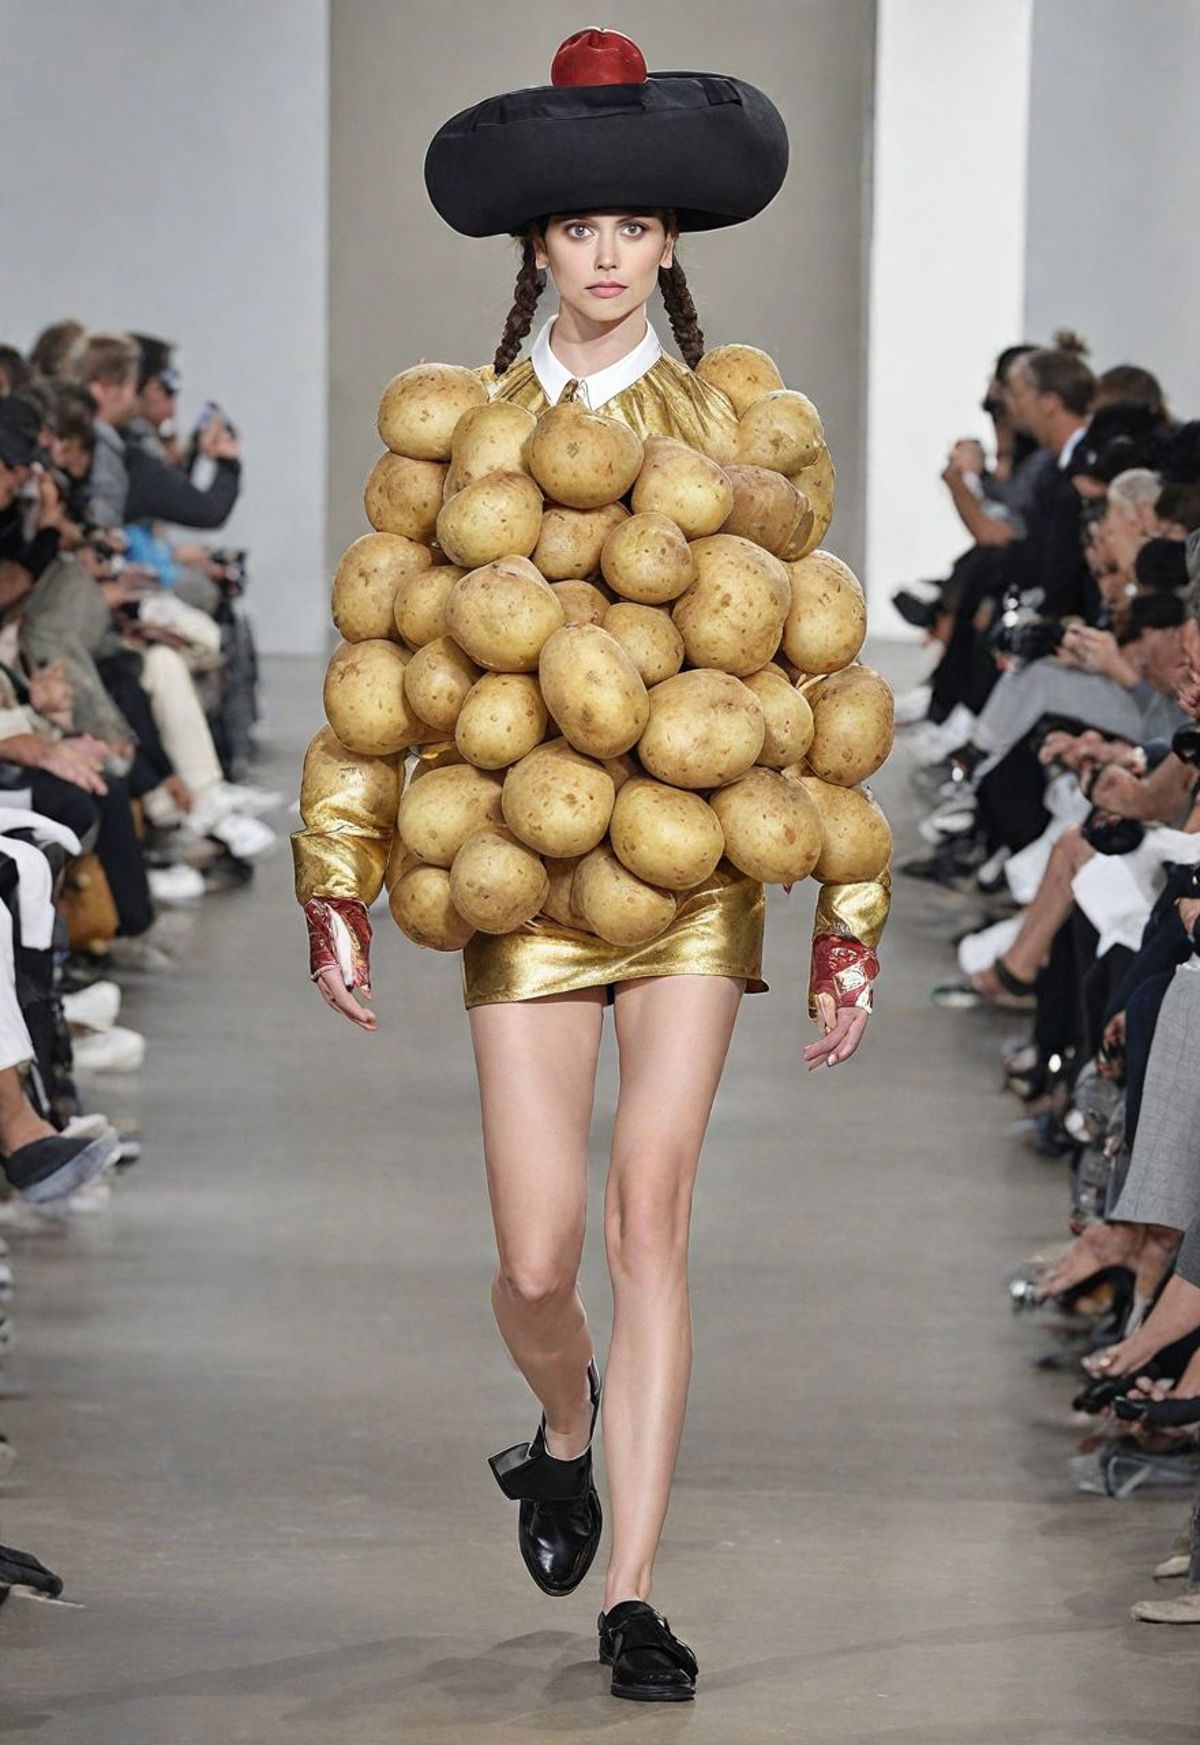 A woman wearing a potato dress is walking down a runway.